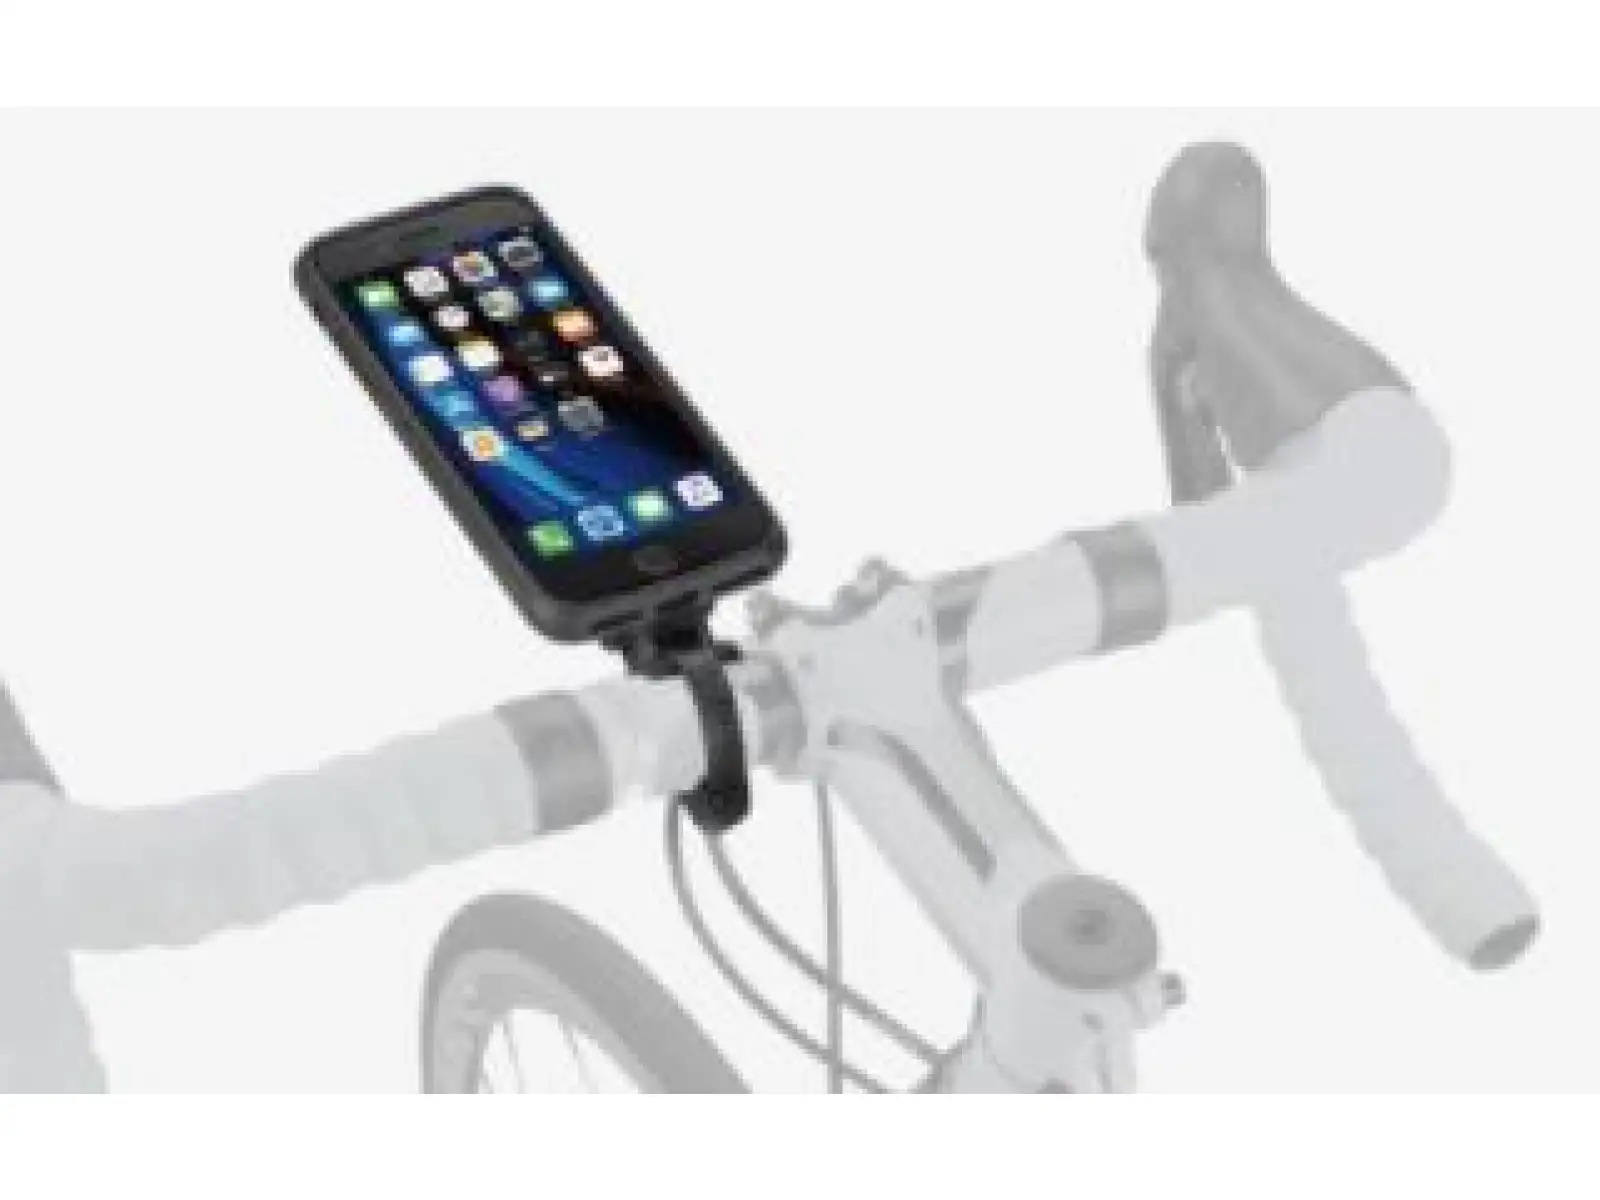 Topeak Ridecase s držákem pro iPhone 11 Pro